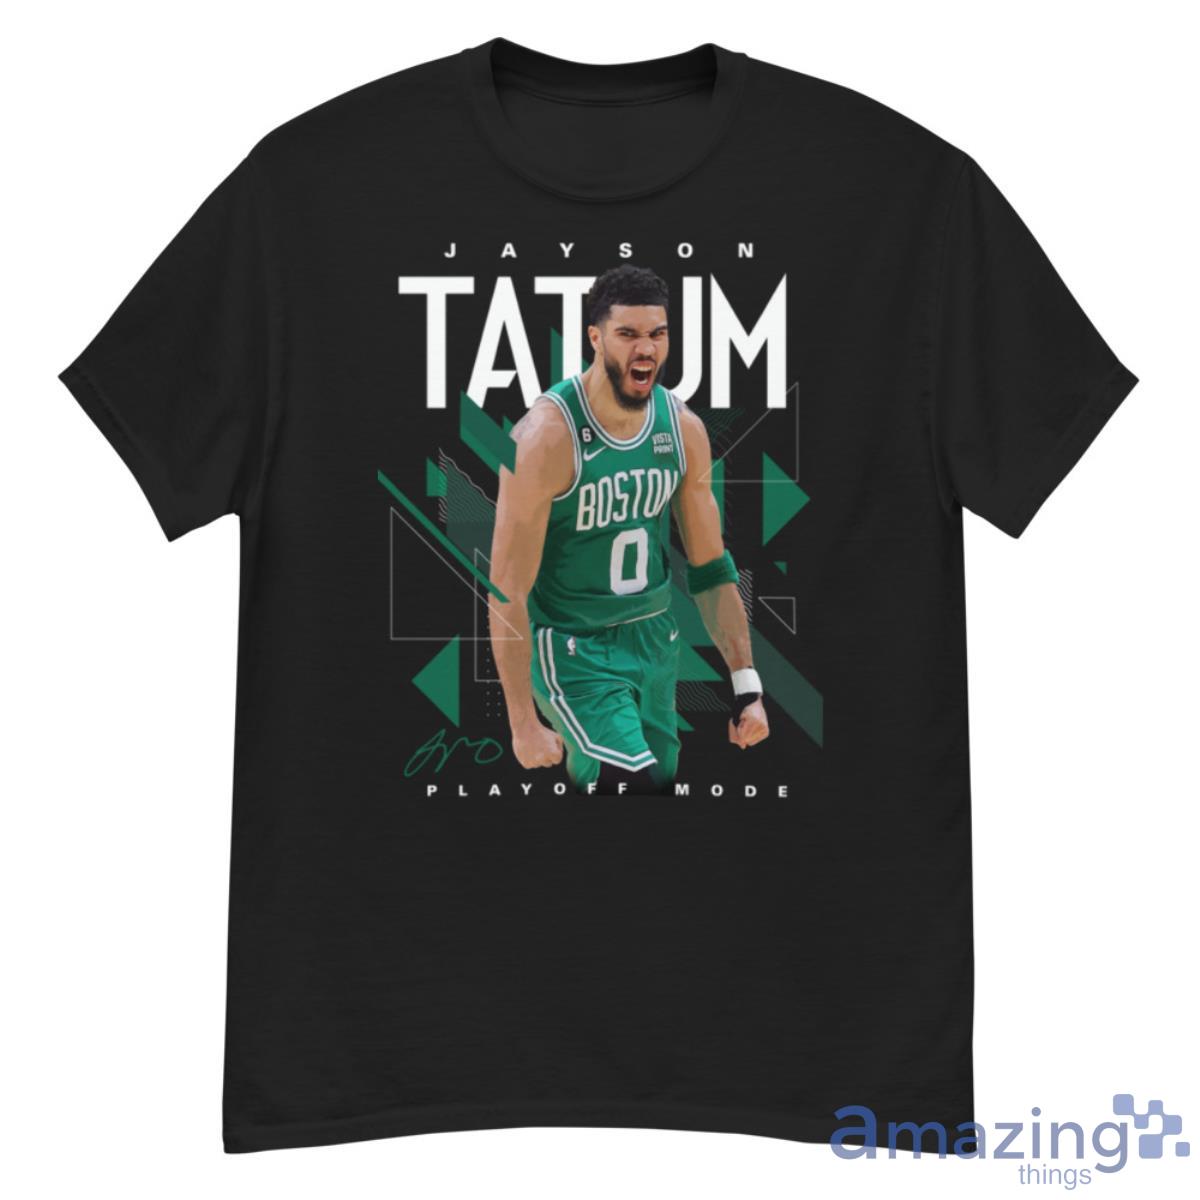 Jayson Tatum Boston Celtics "Logo" Jersey shirt Hooded SWEATSHIRT